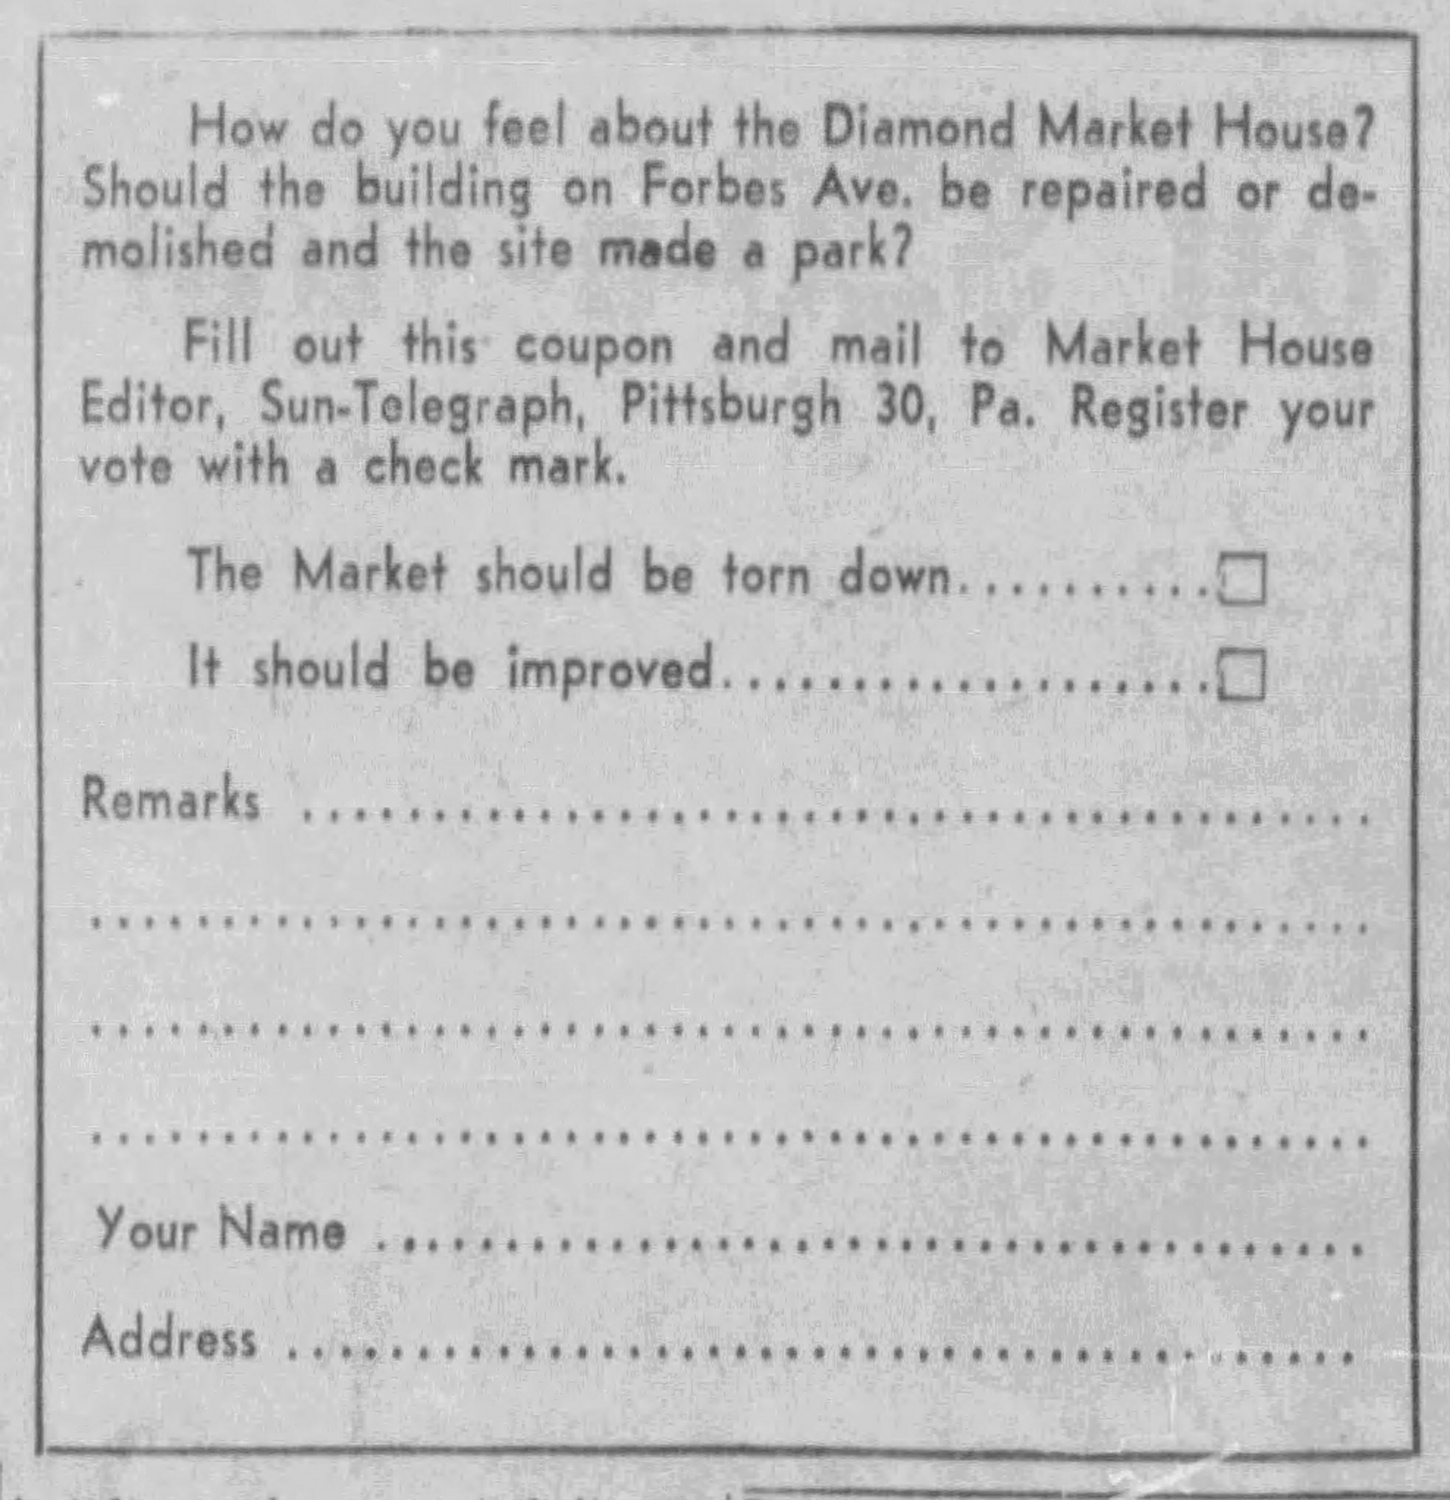 Replace or Demolish voting coupon, 1960.